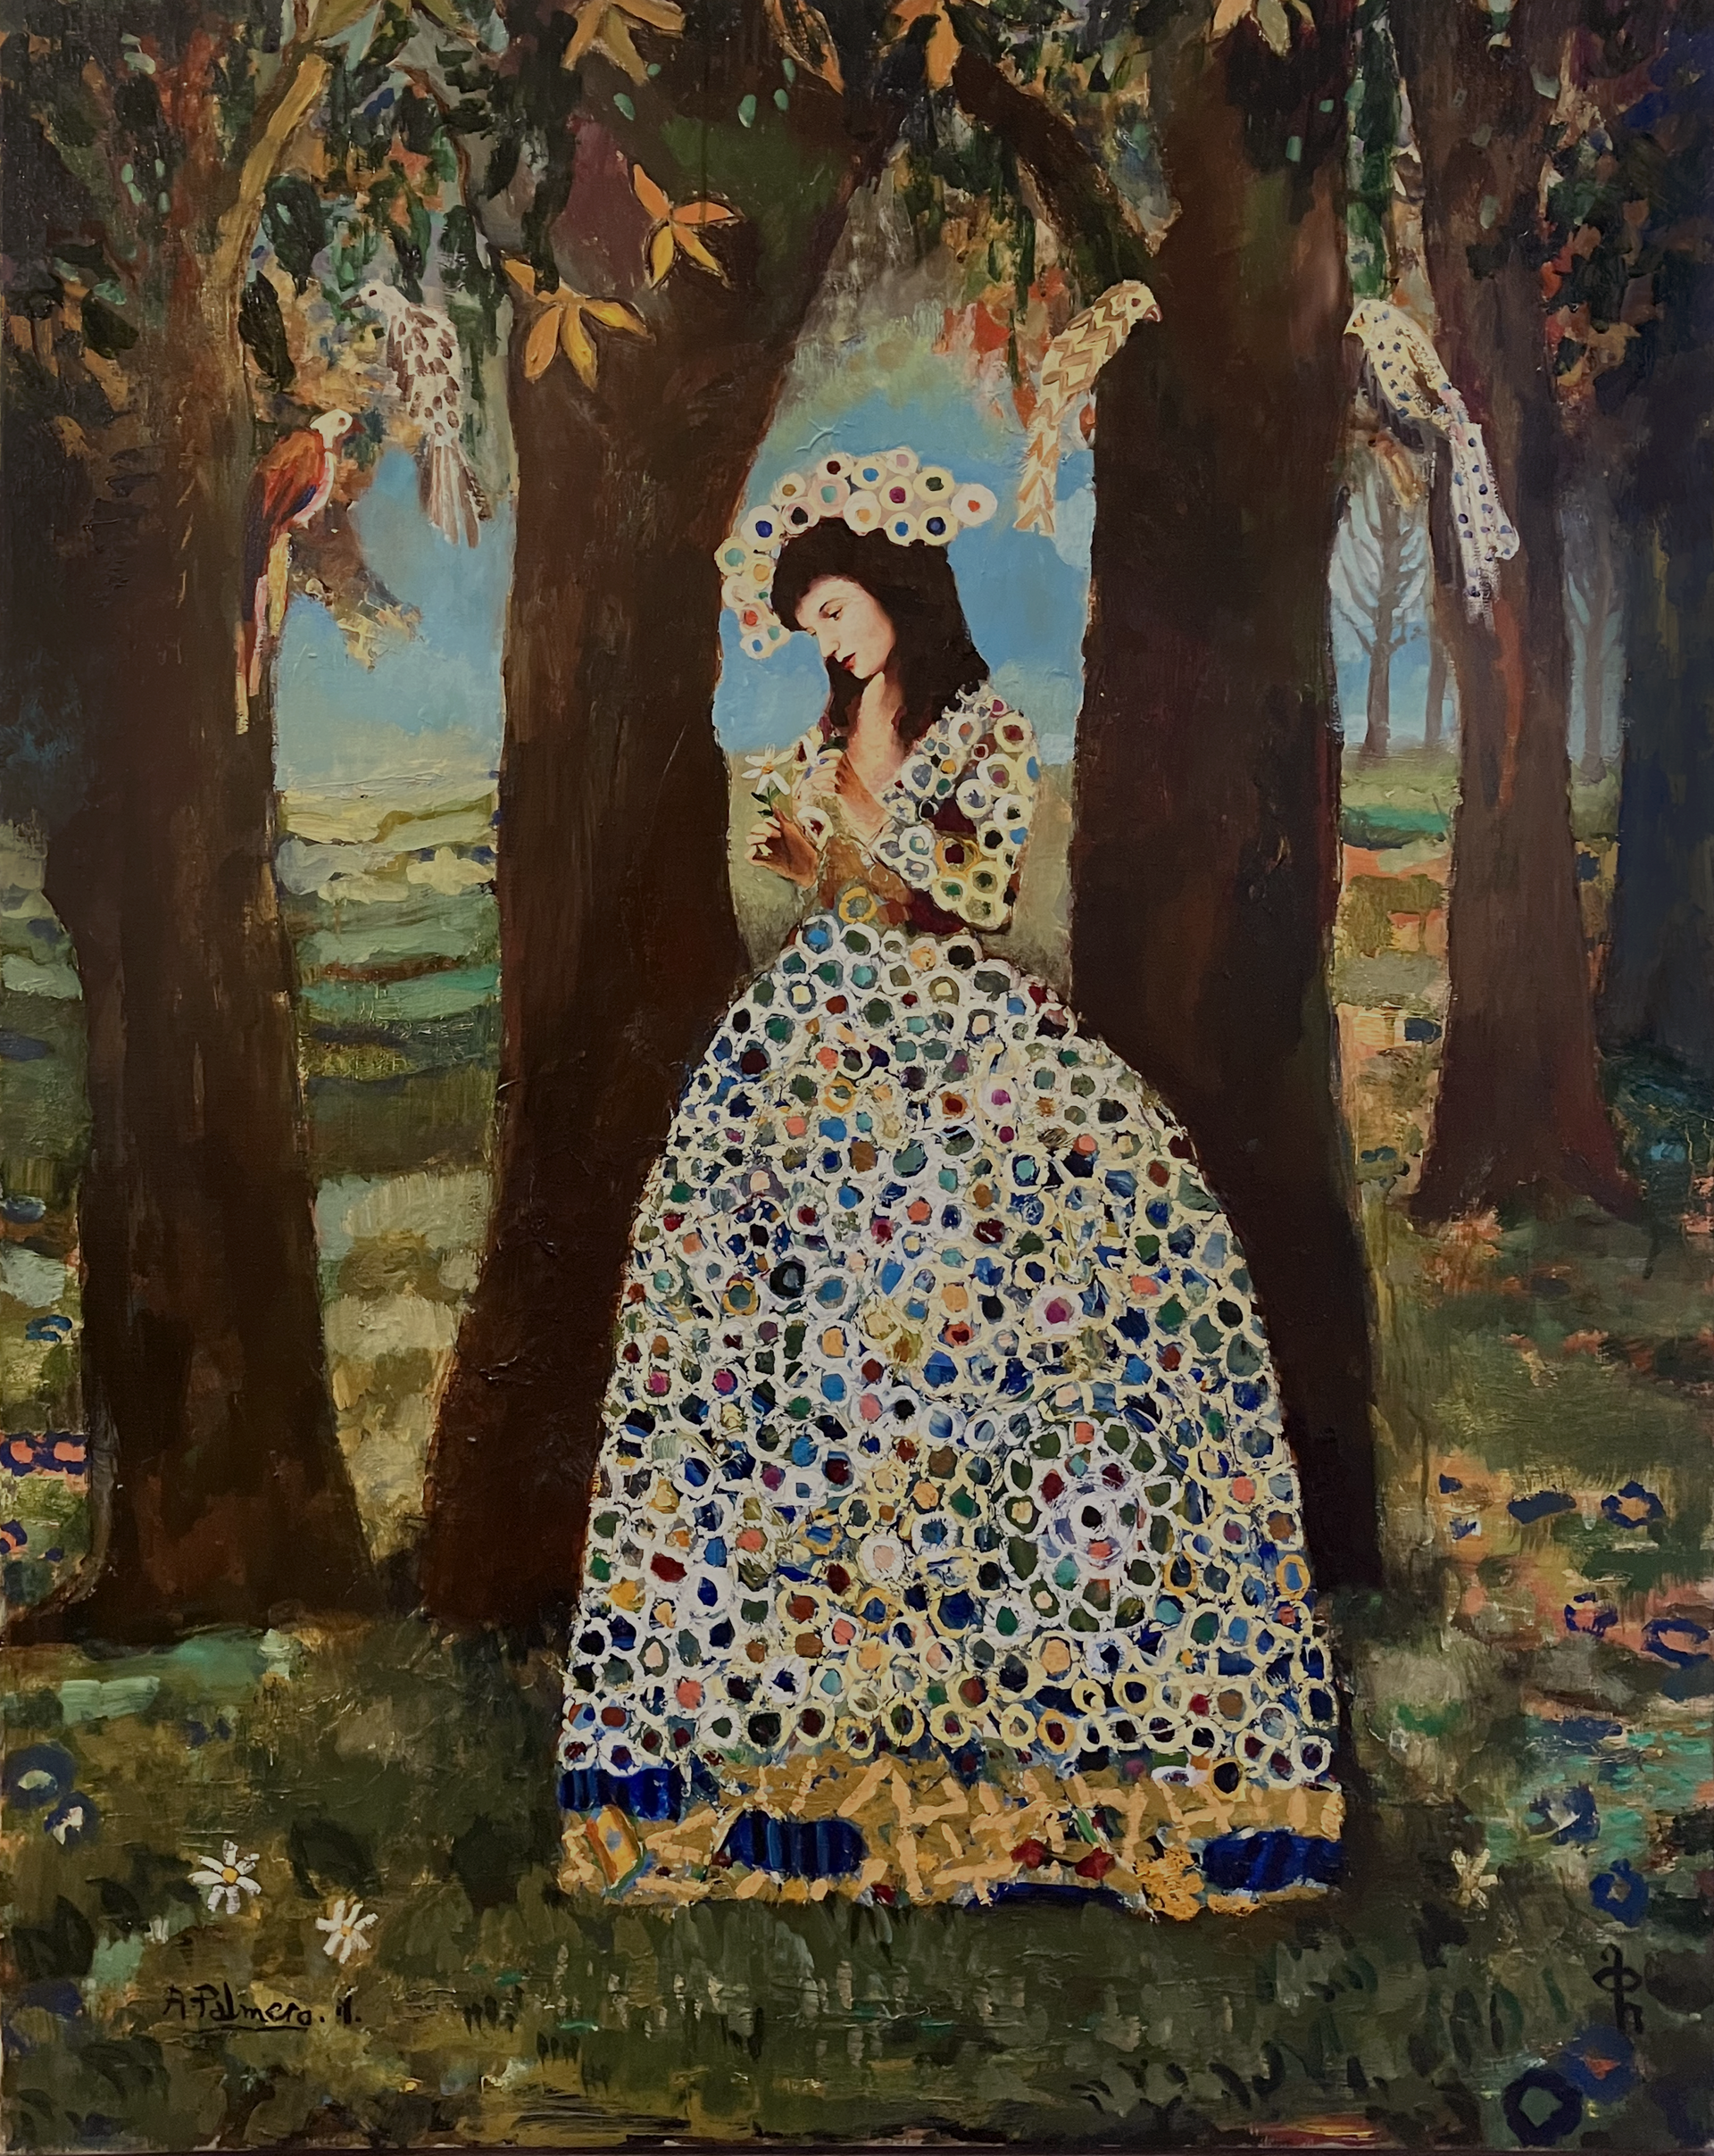 Menina del Bosque by Alfredo Palmero